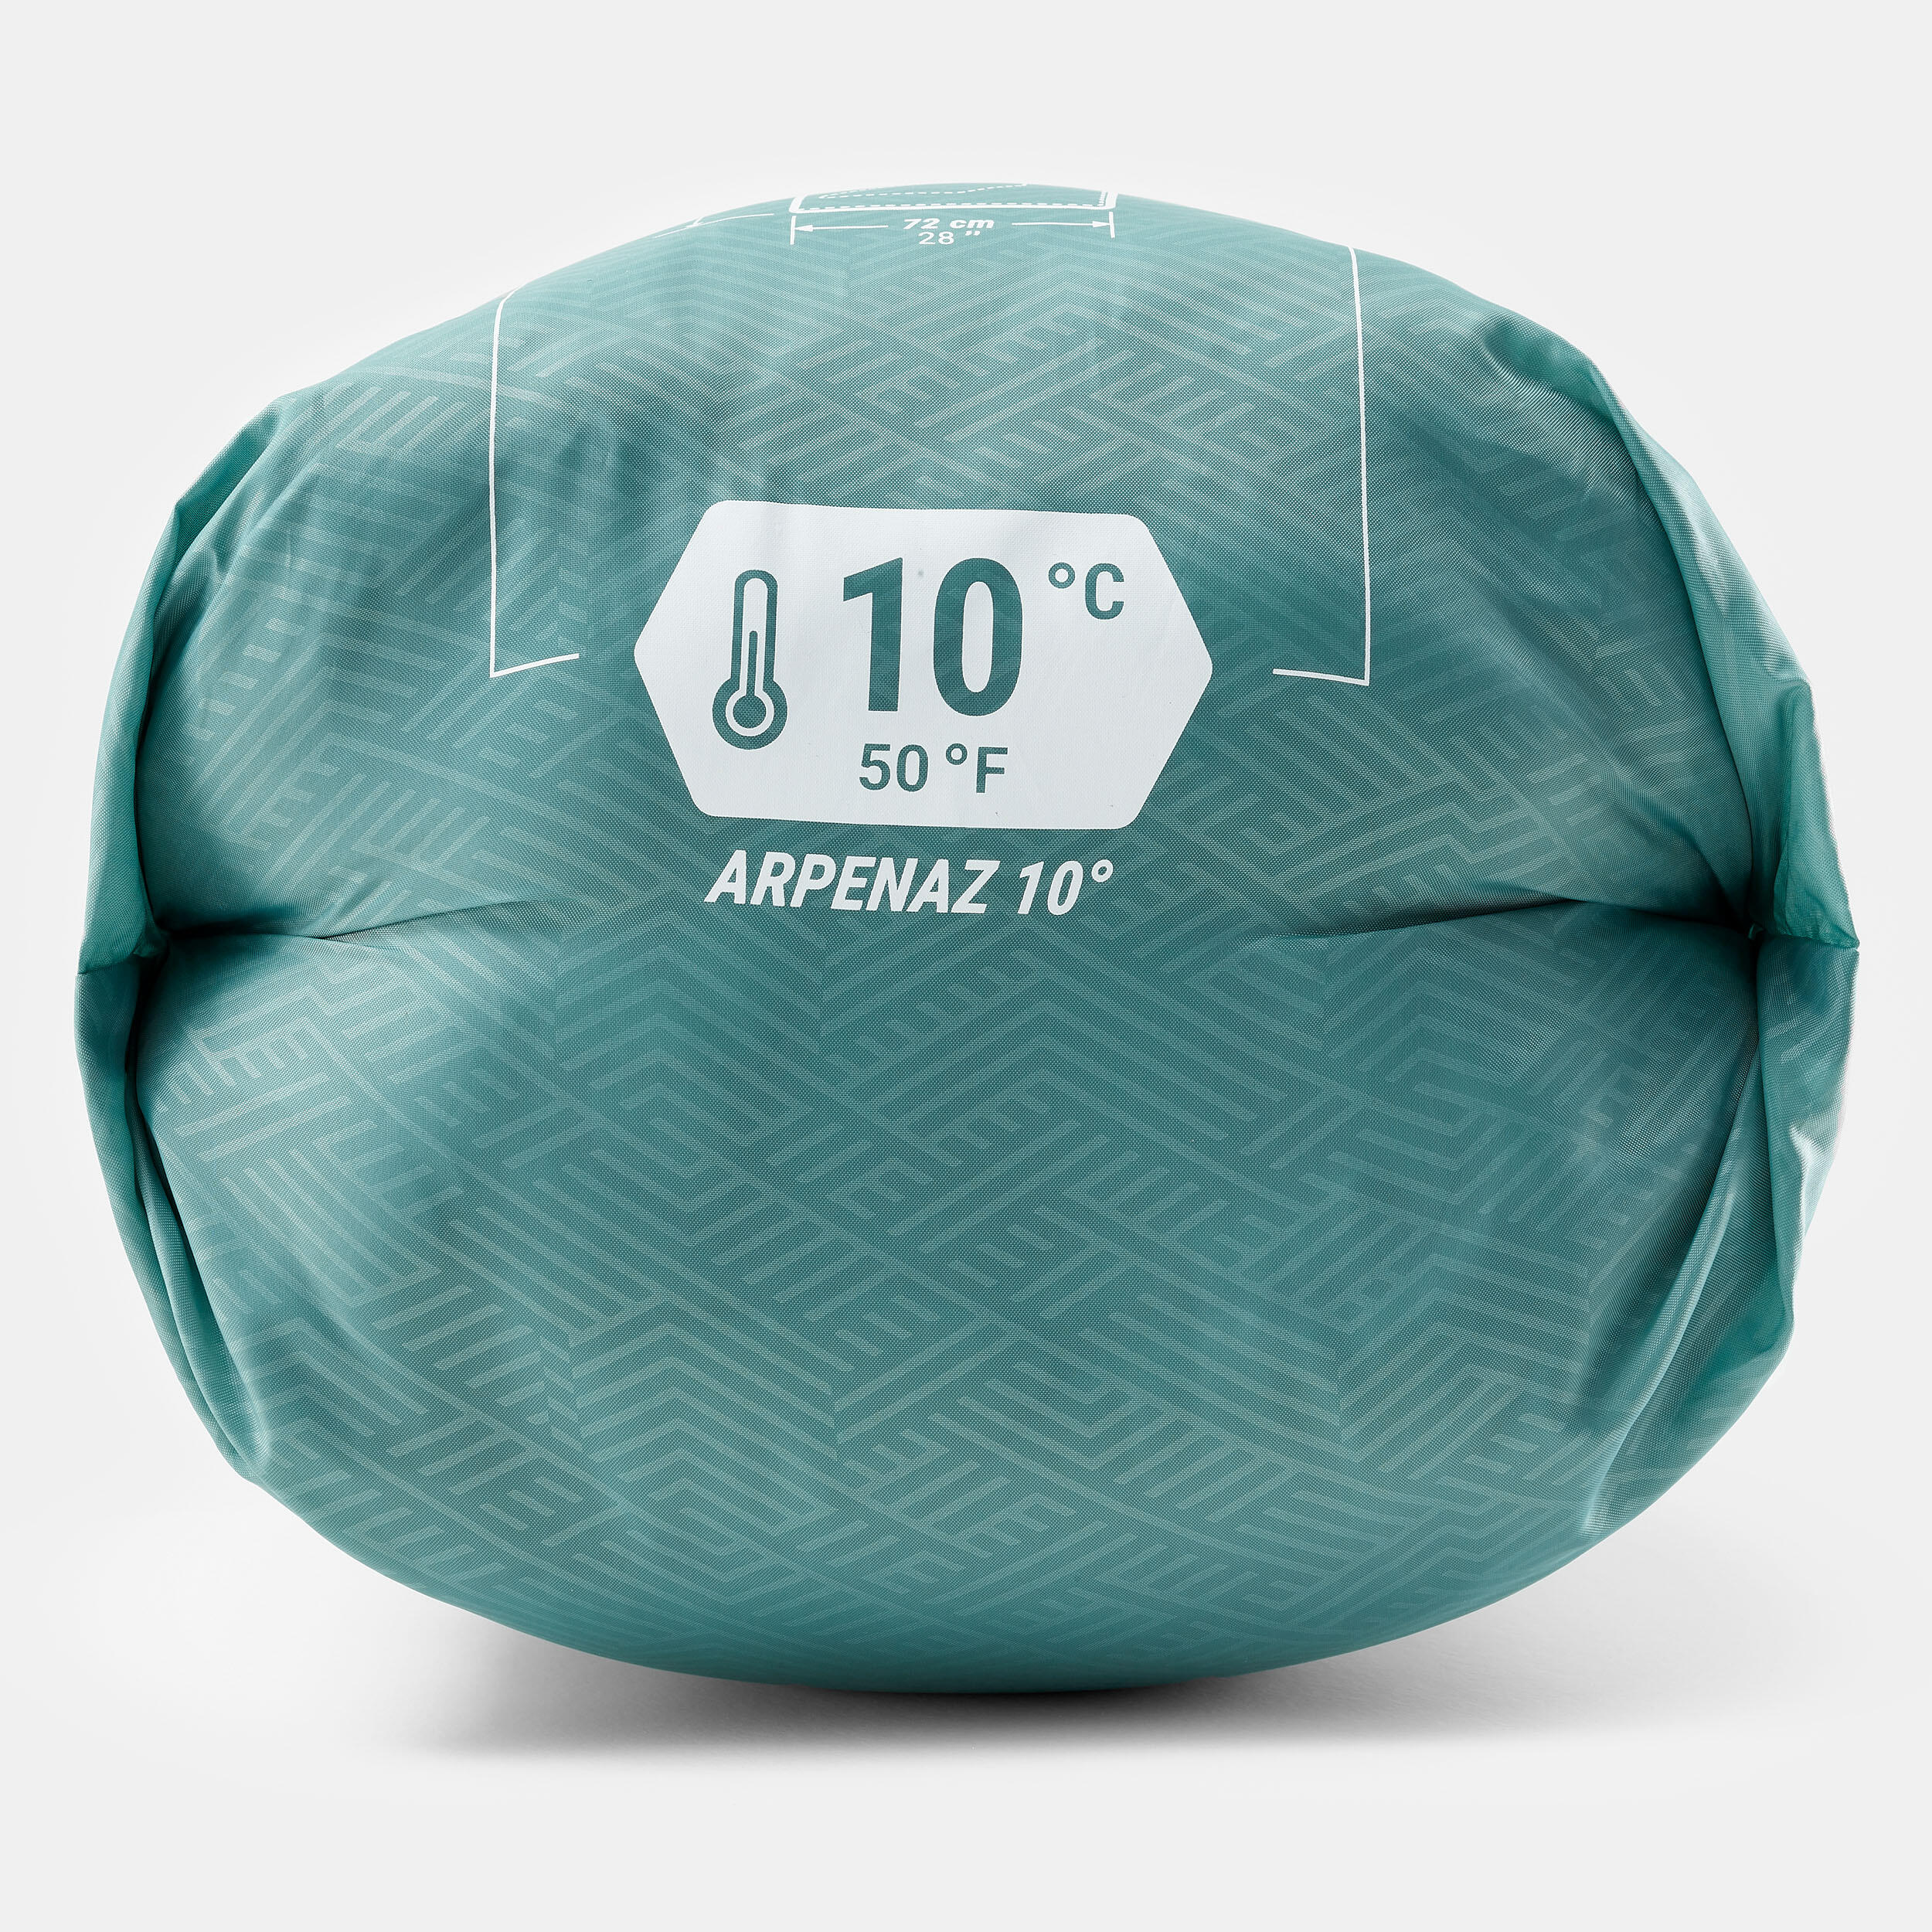 CAMPING SLEEPING BAG - ARPENAZ 10° 4/7